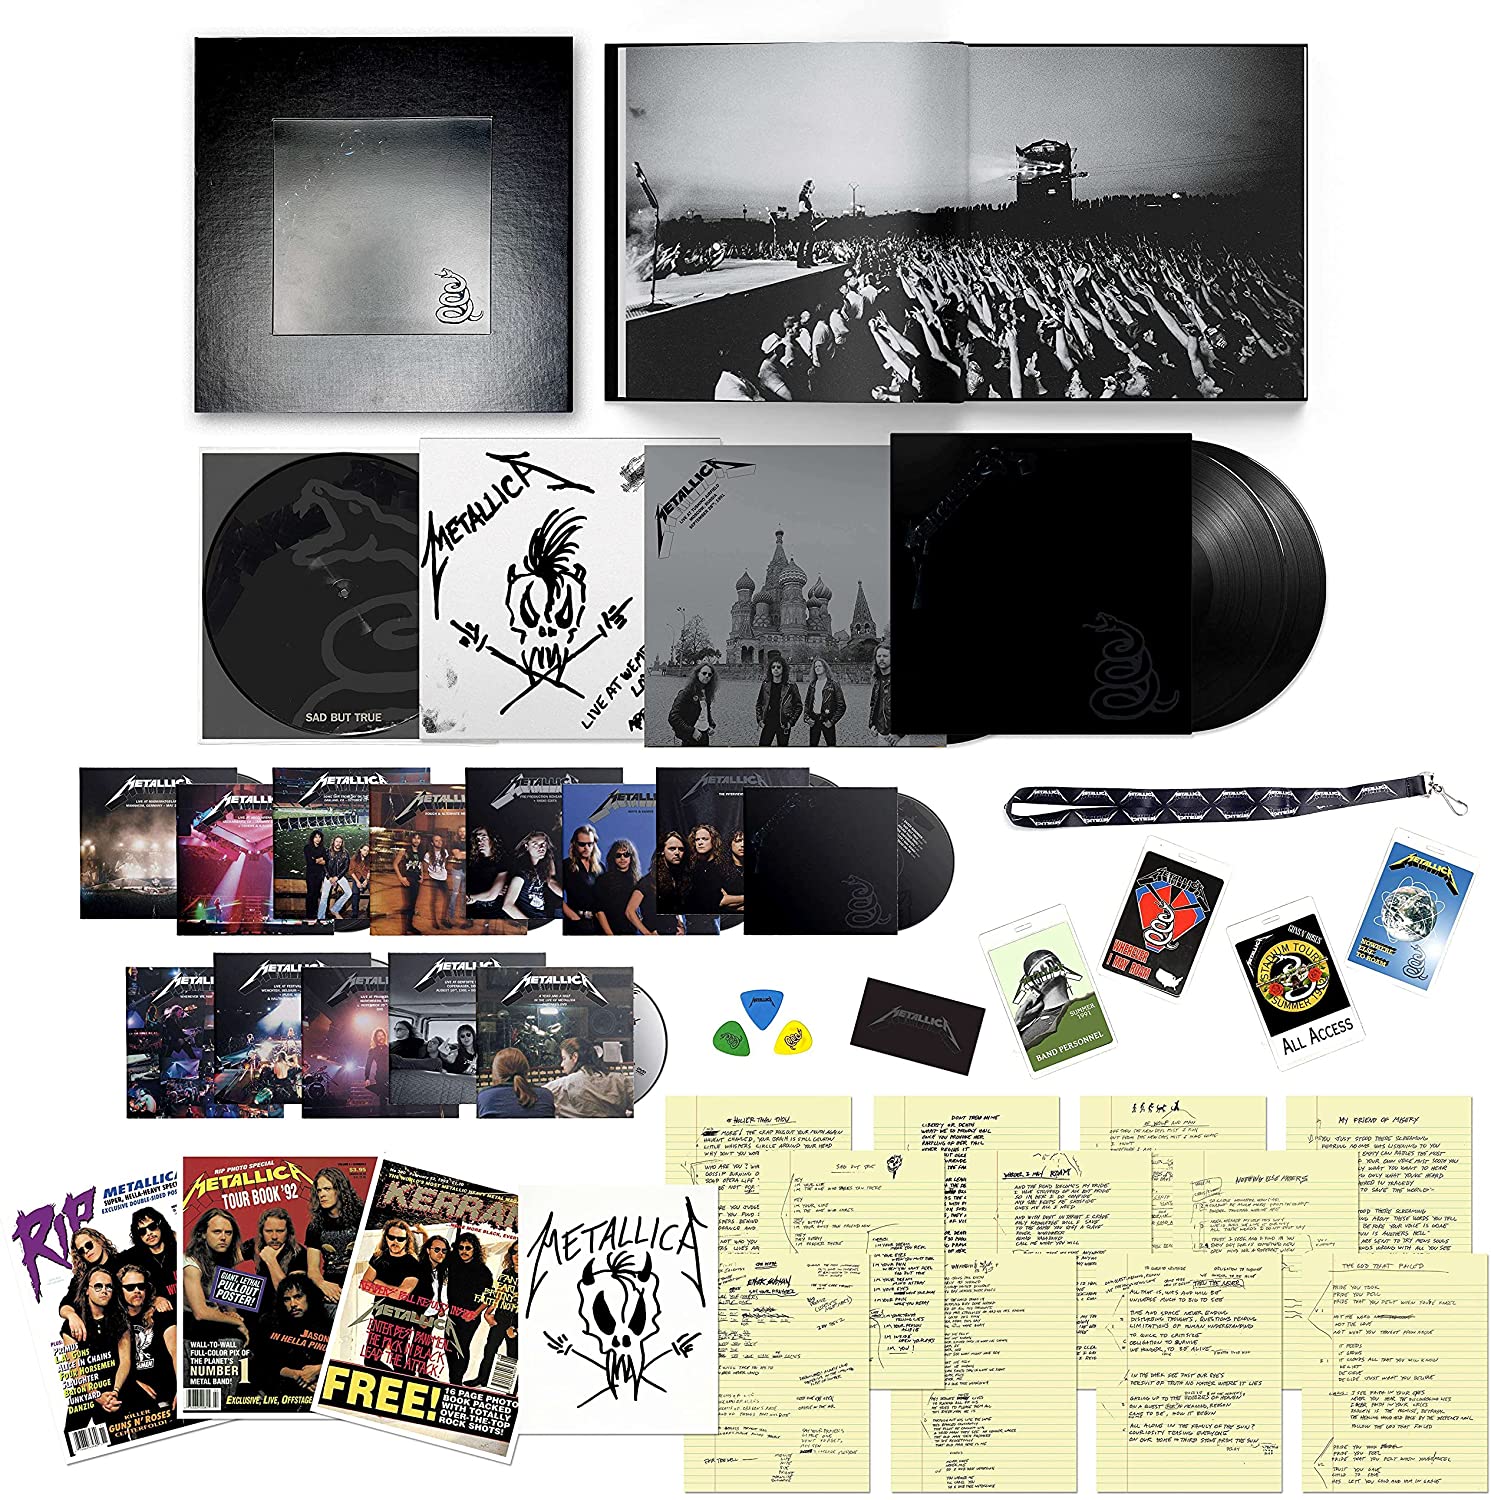 Metallica / The Black Album reissue – SuperDeluxeEdition